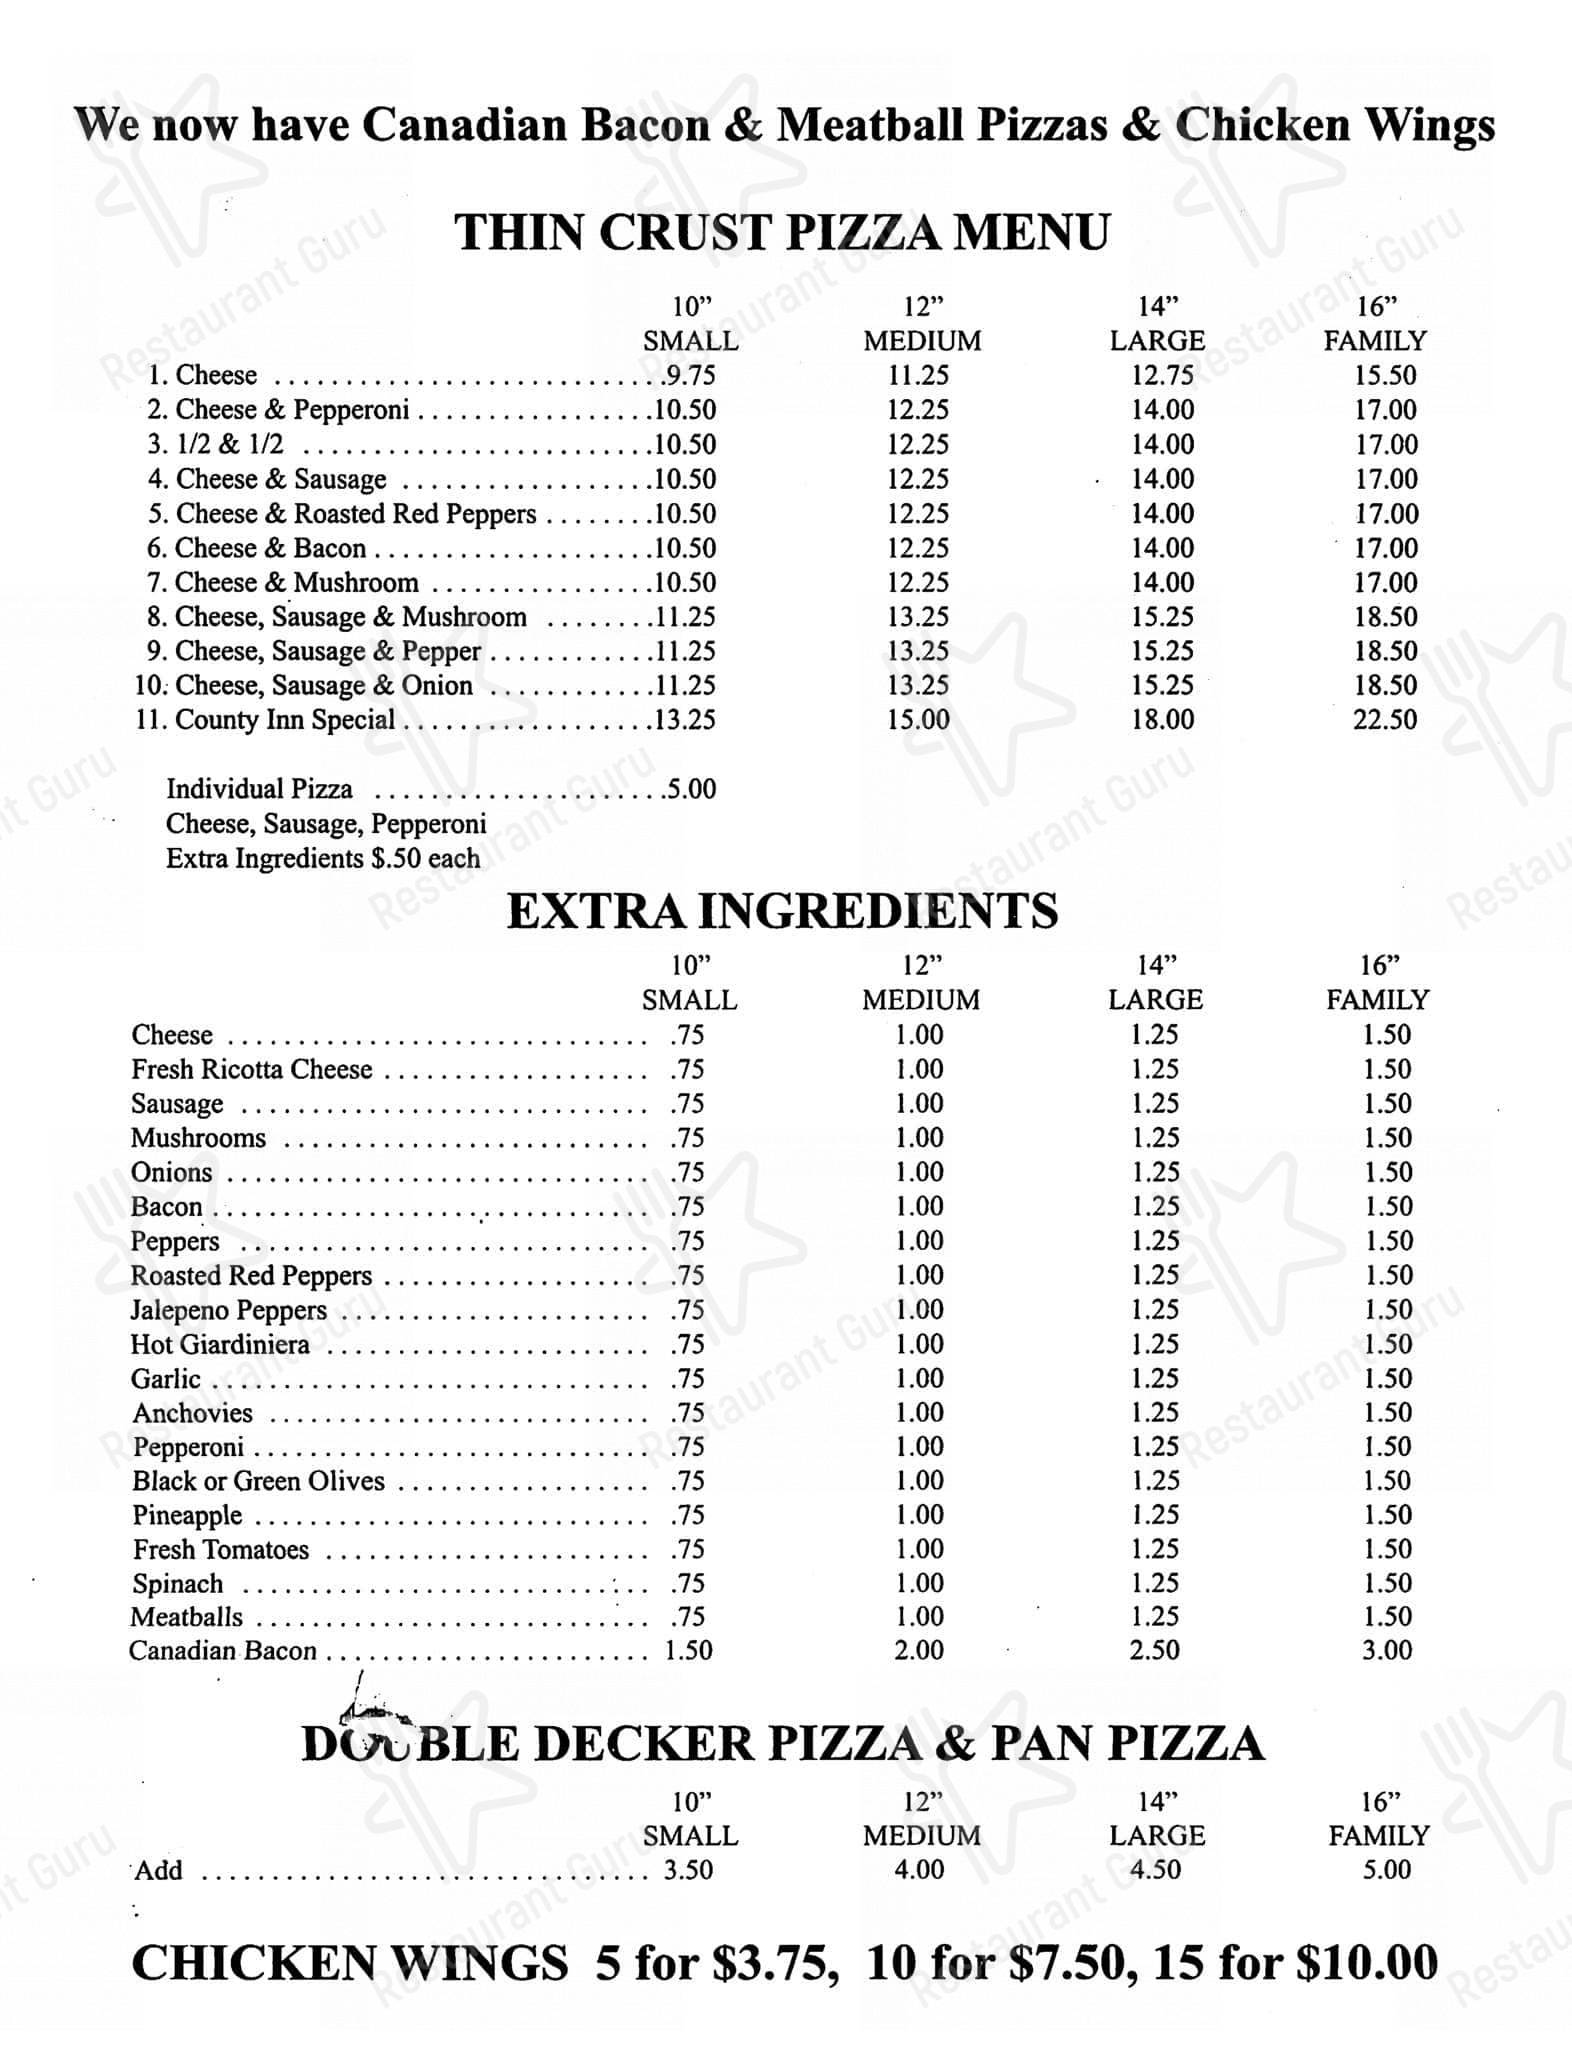 County Inn Pizza menu